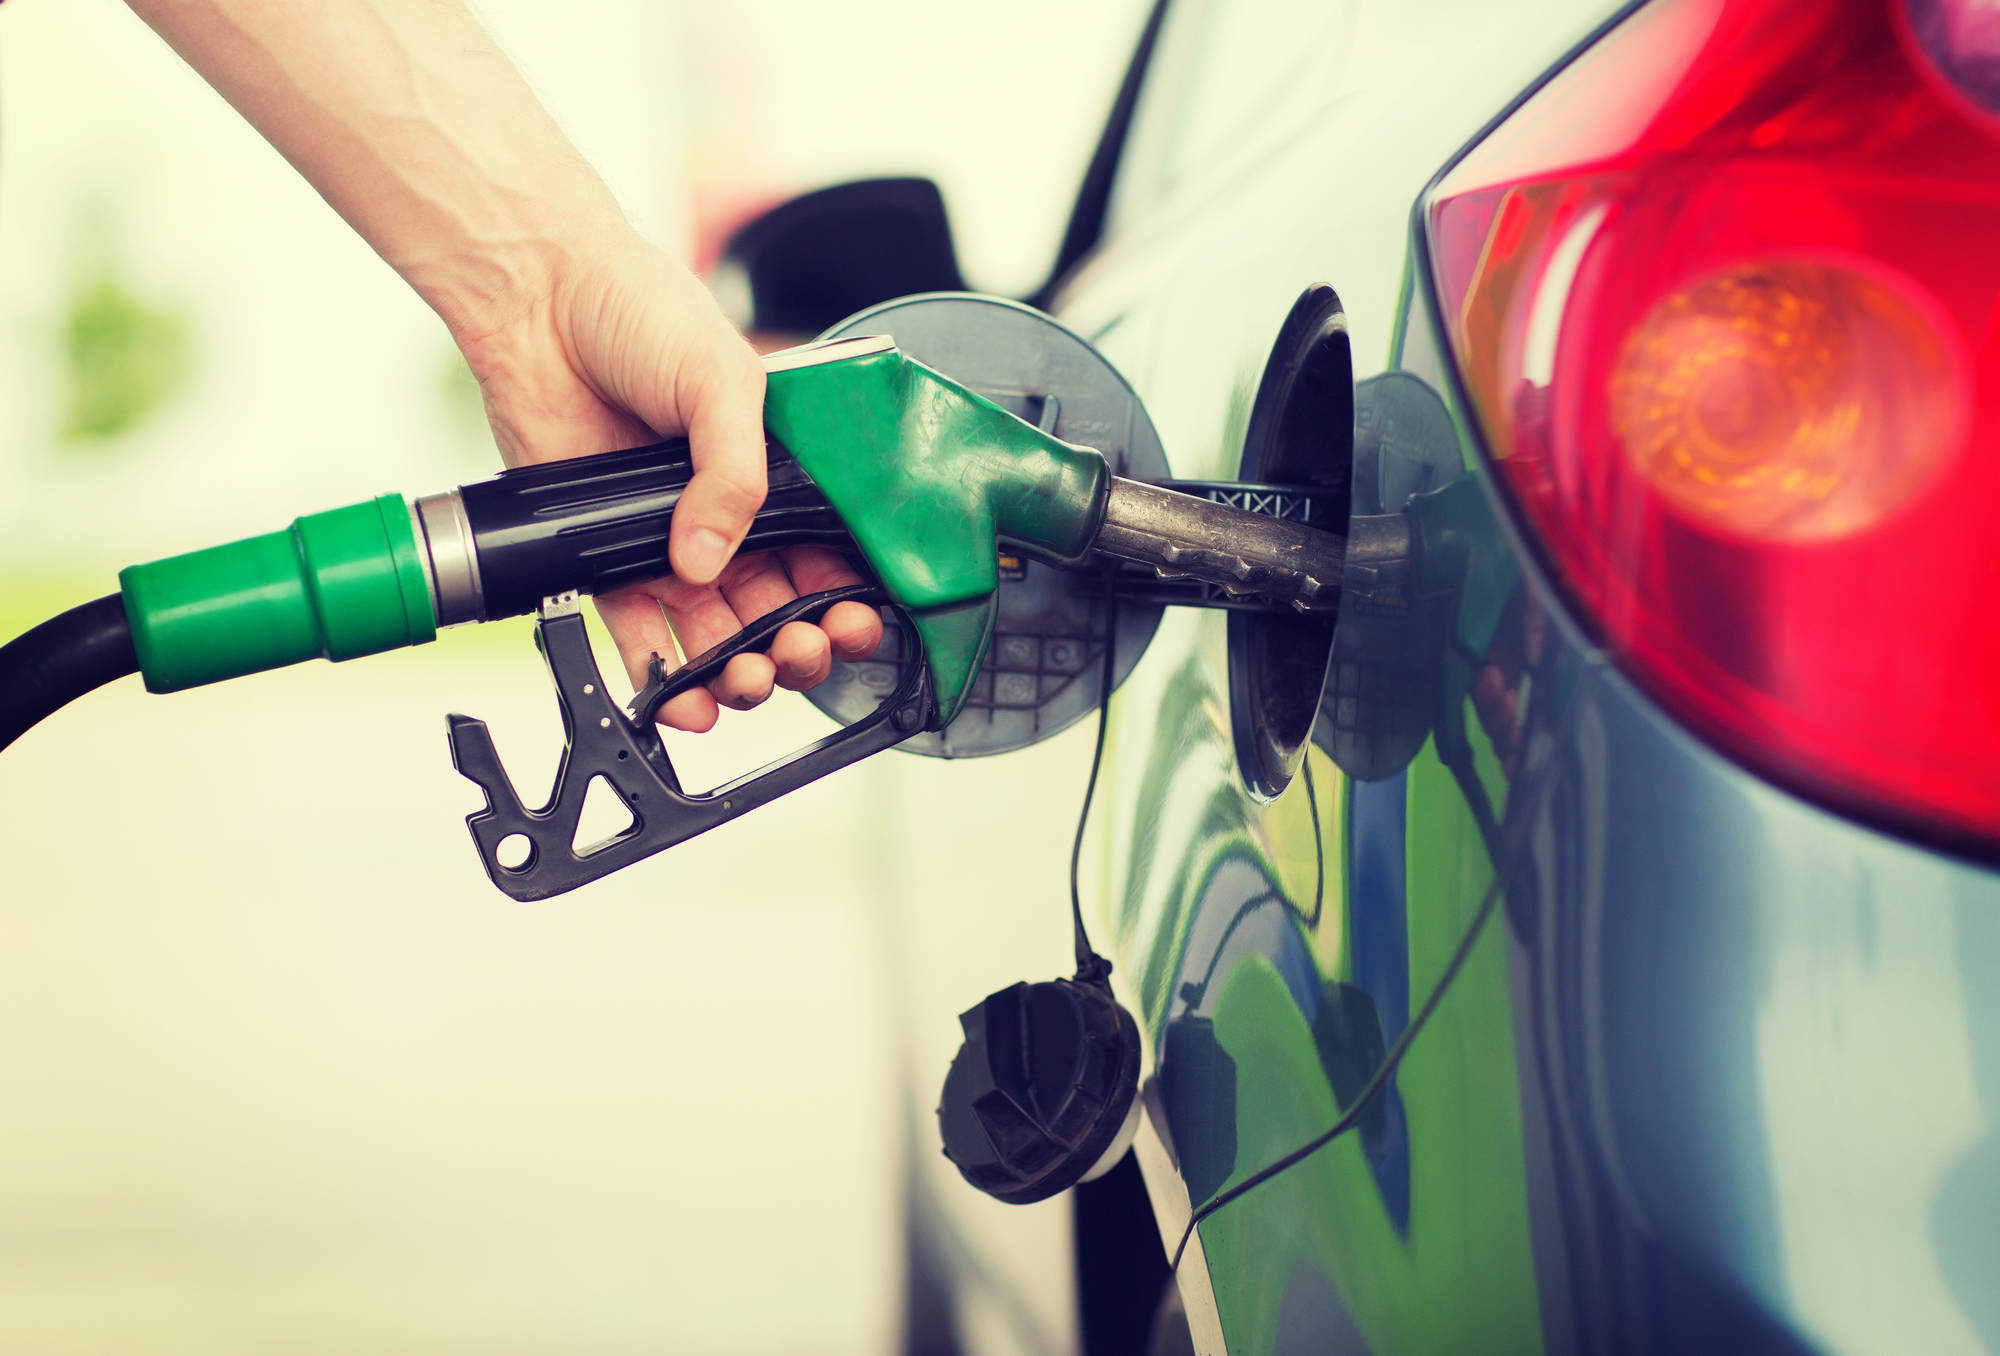 Petrol Diesel Price: Oil prices caught fire, petrol and diesel prices again increased today #Petrol100 #petrolpricehike